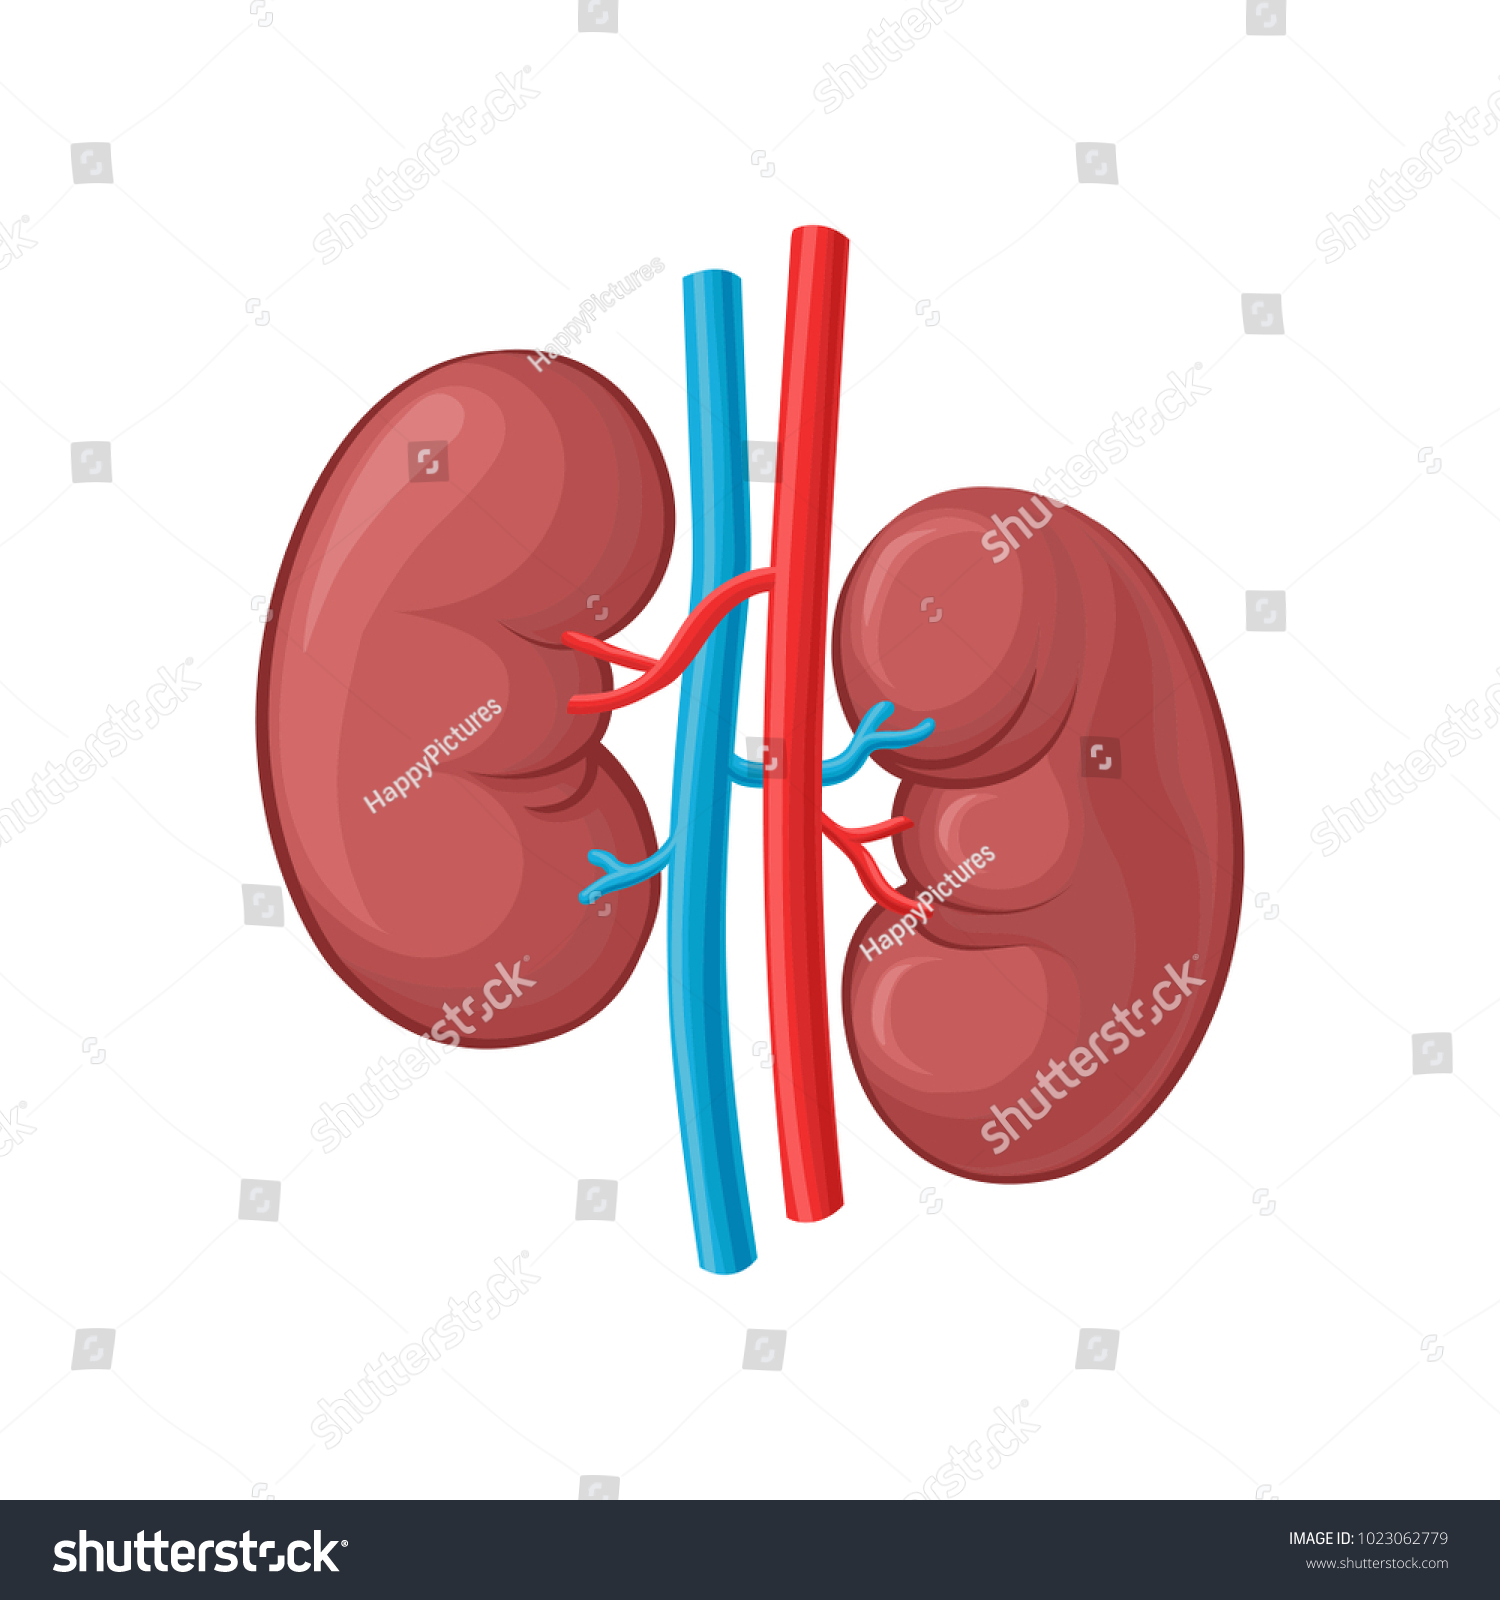 822 Right kidney Images, Stock Photos & Vectors | Shutterstock